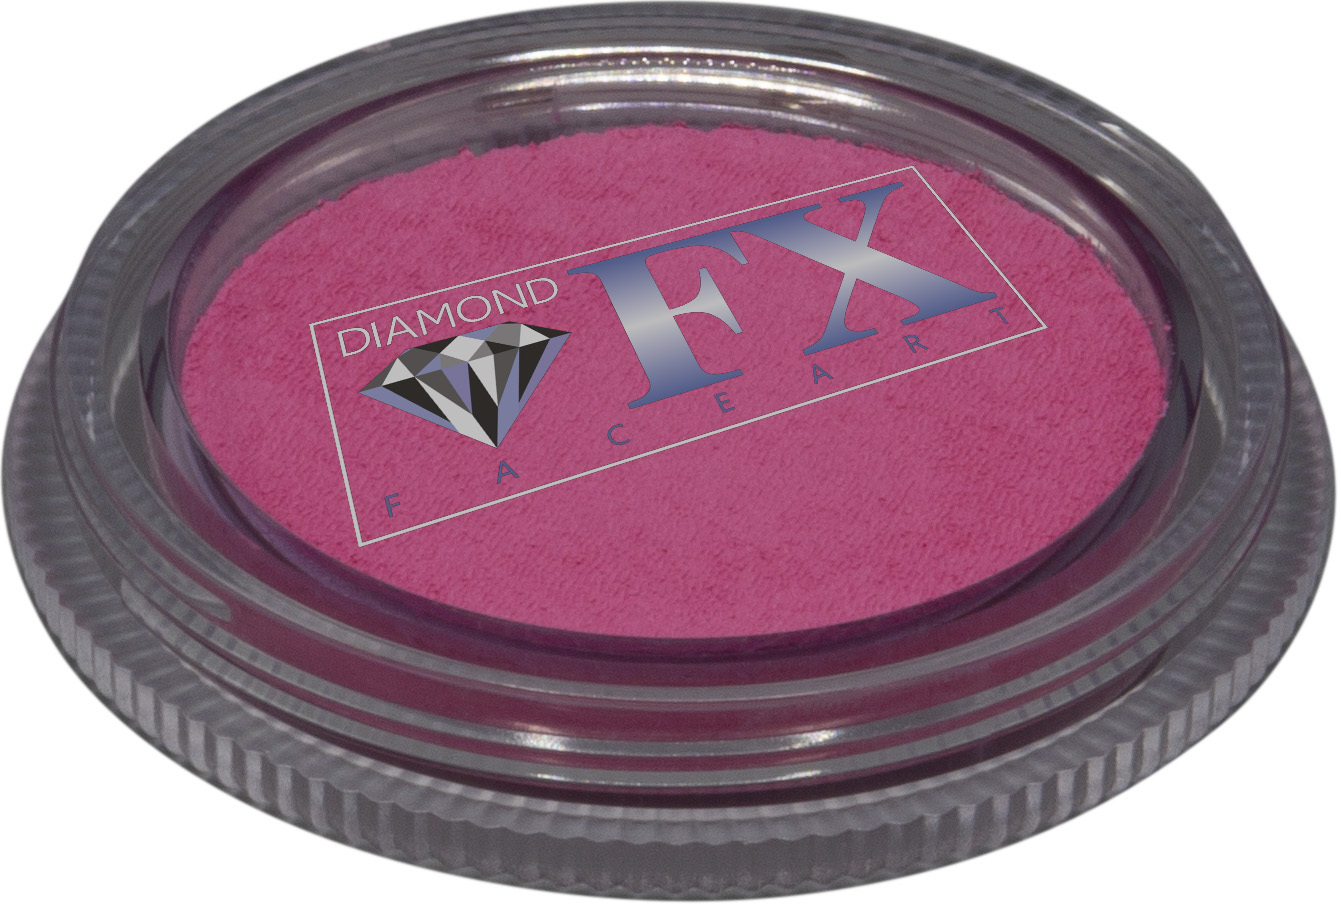 Diamond FX Pink 30g - Small Image